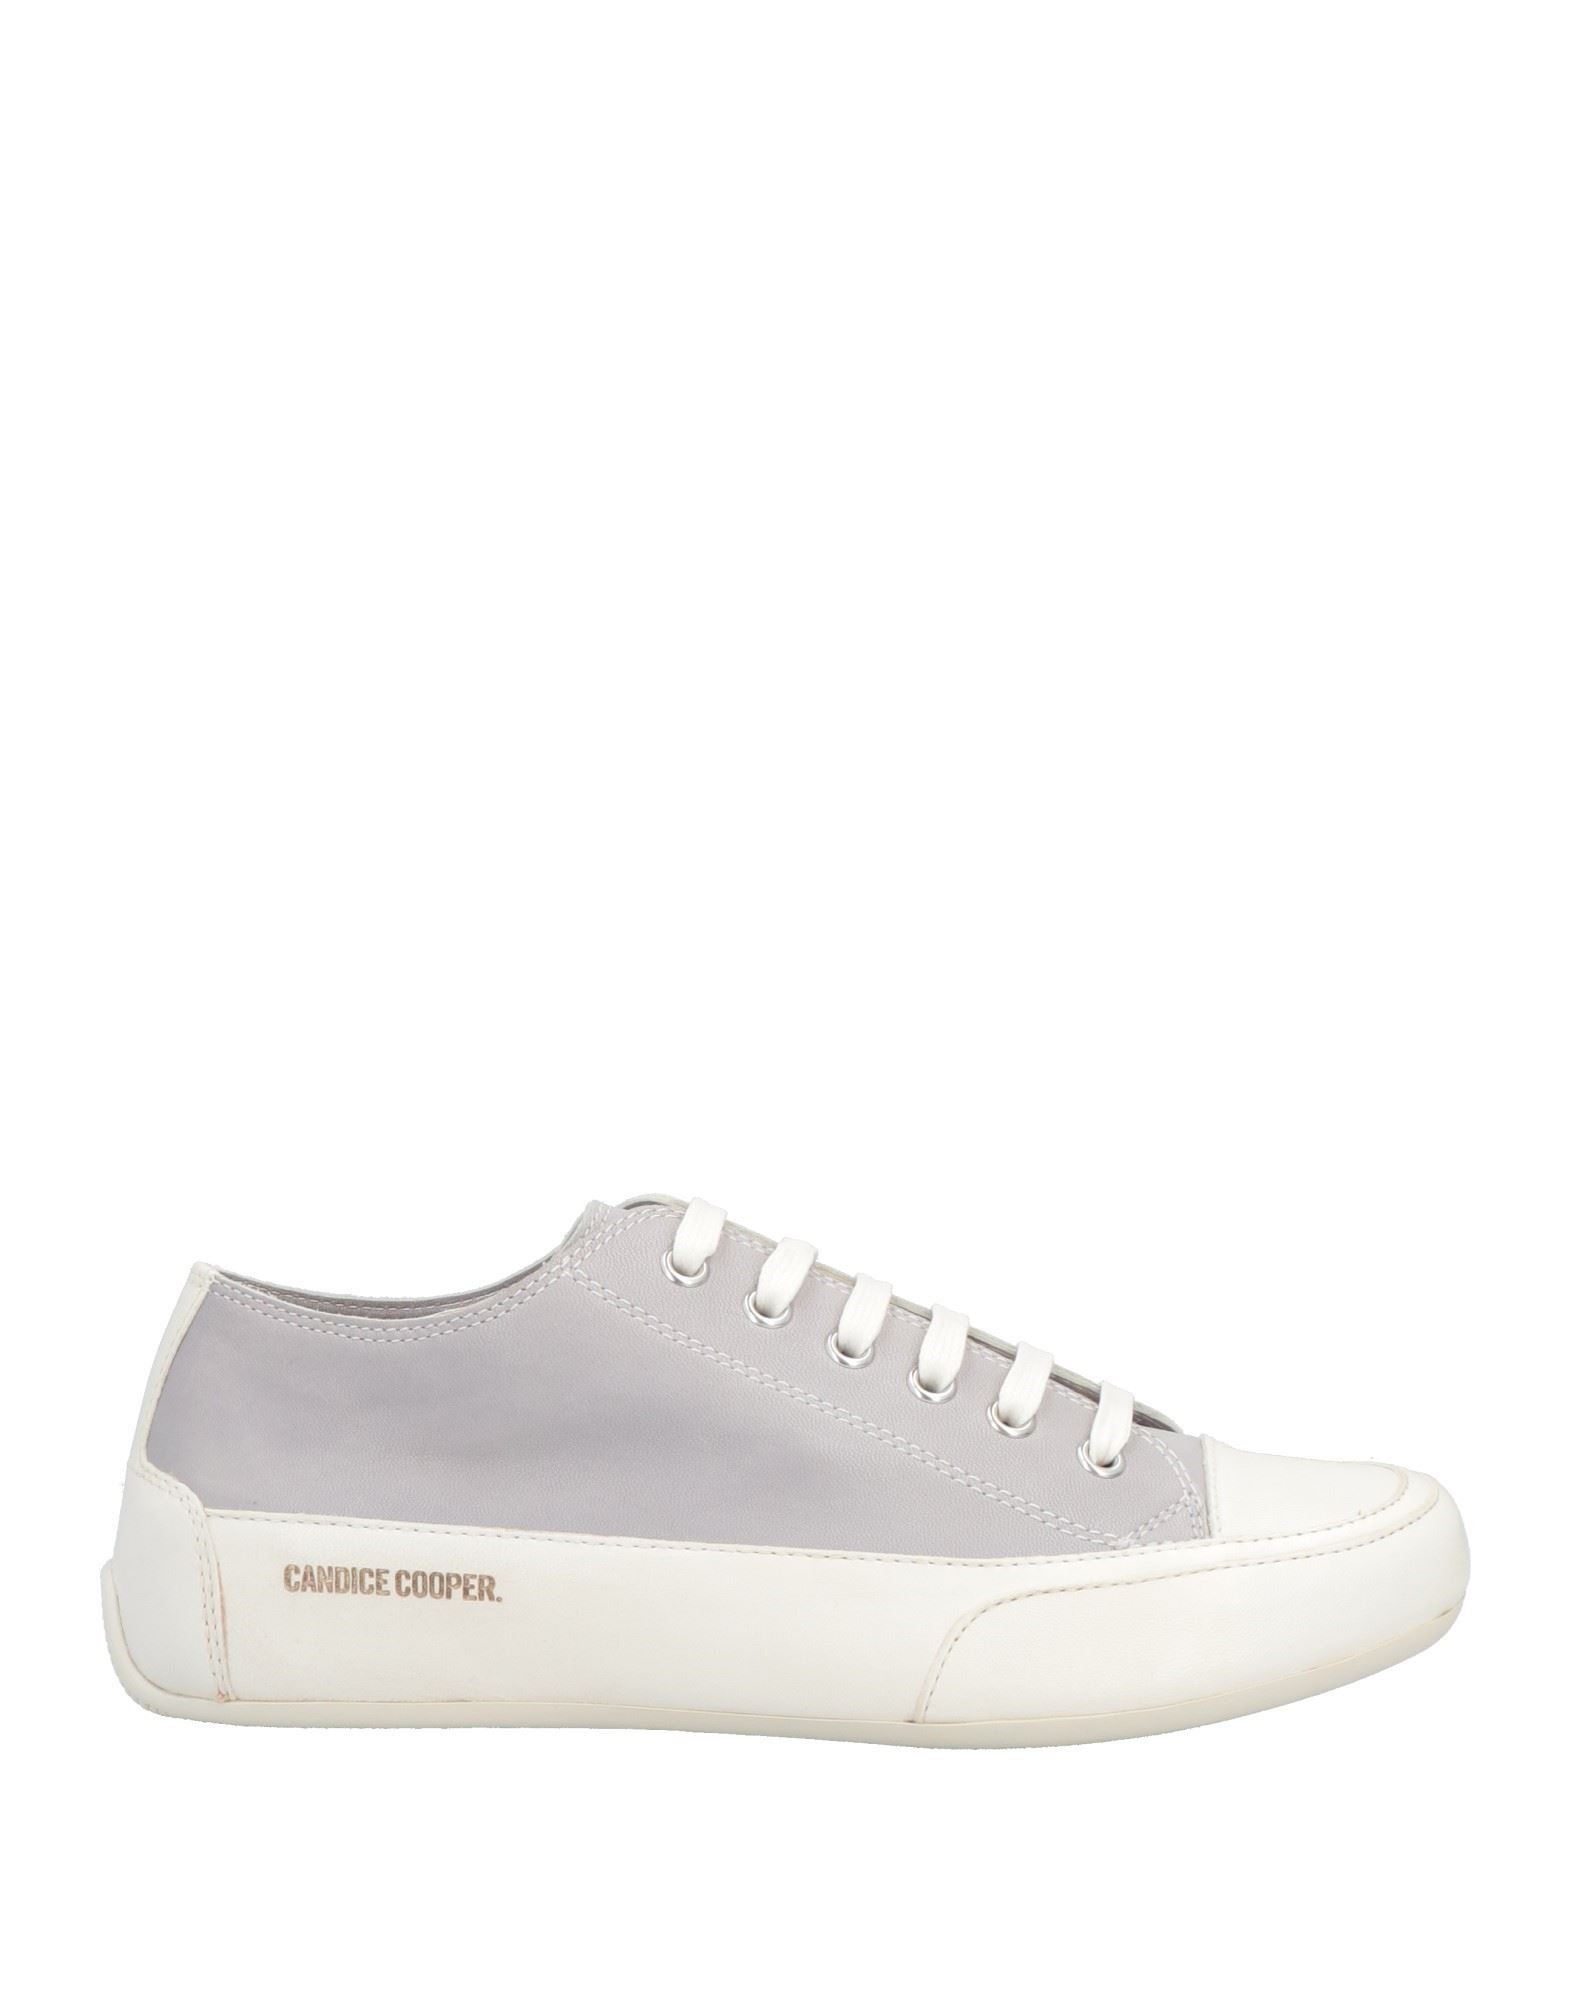 Candice Cooper Sneakers In Grey